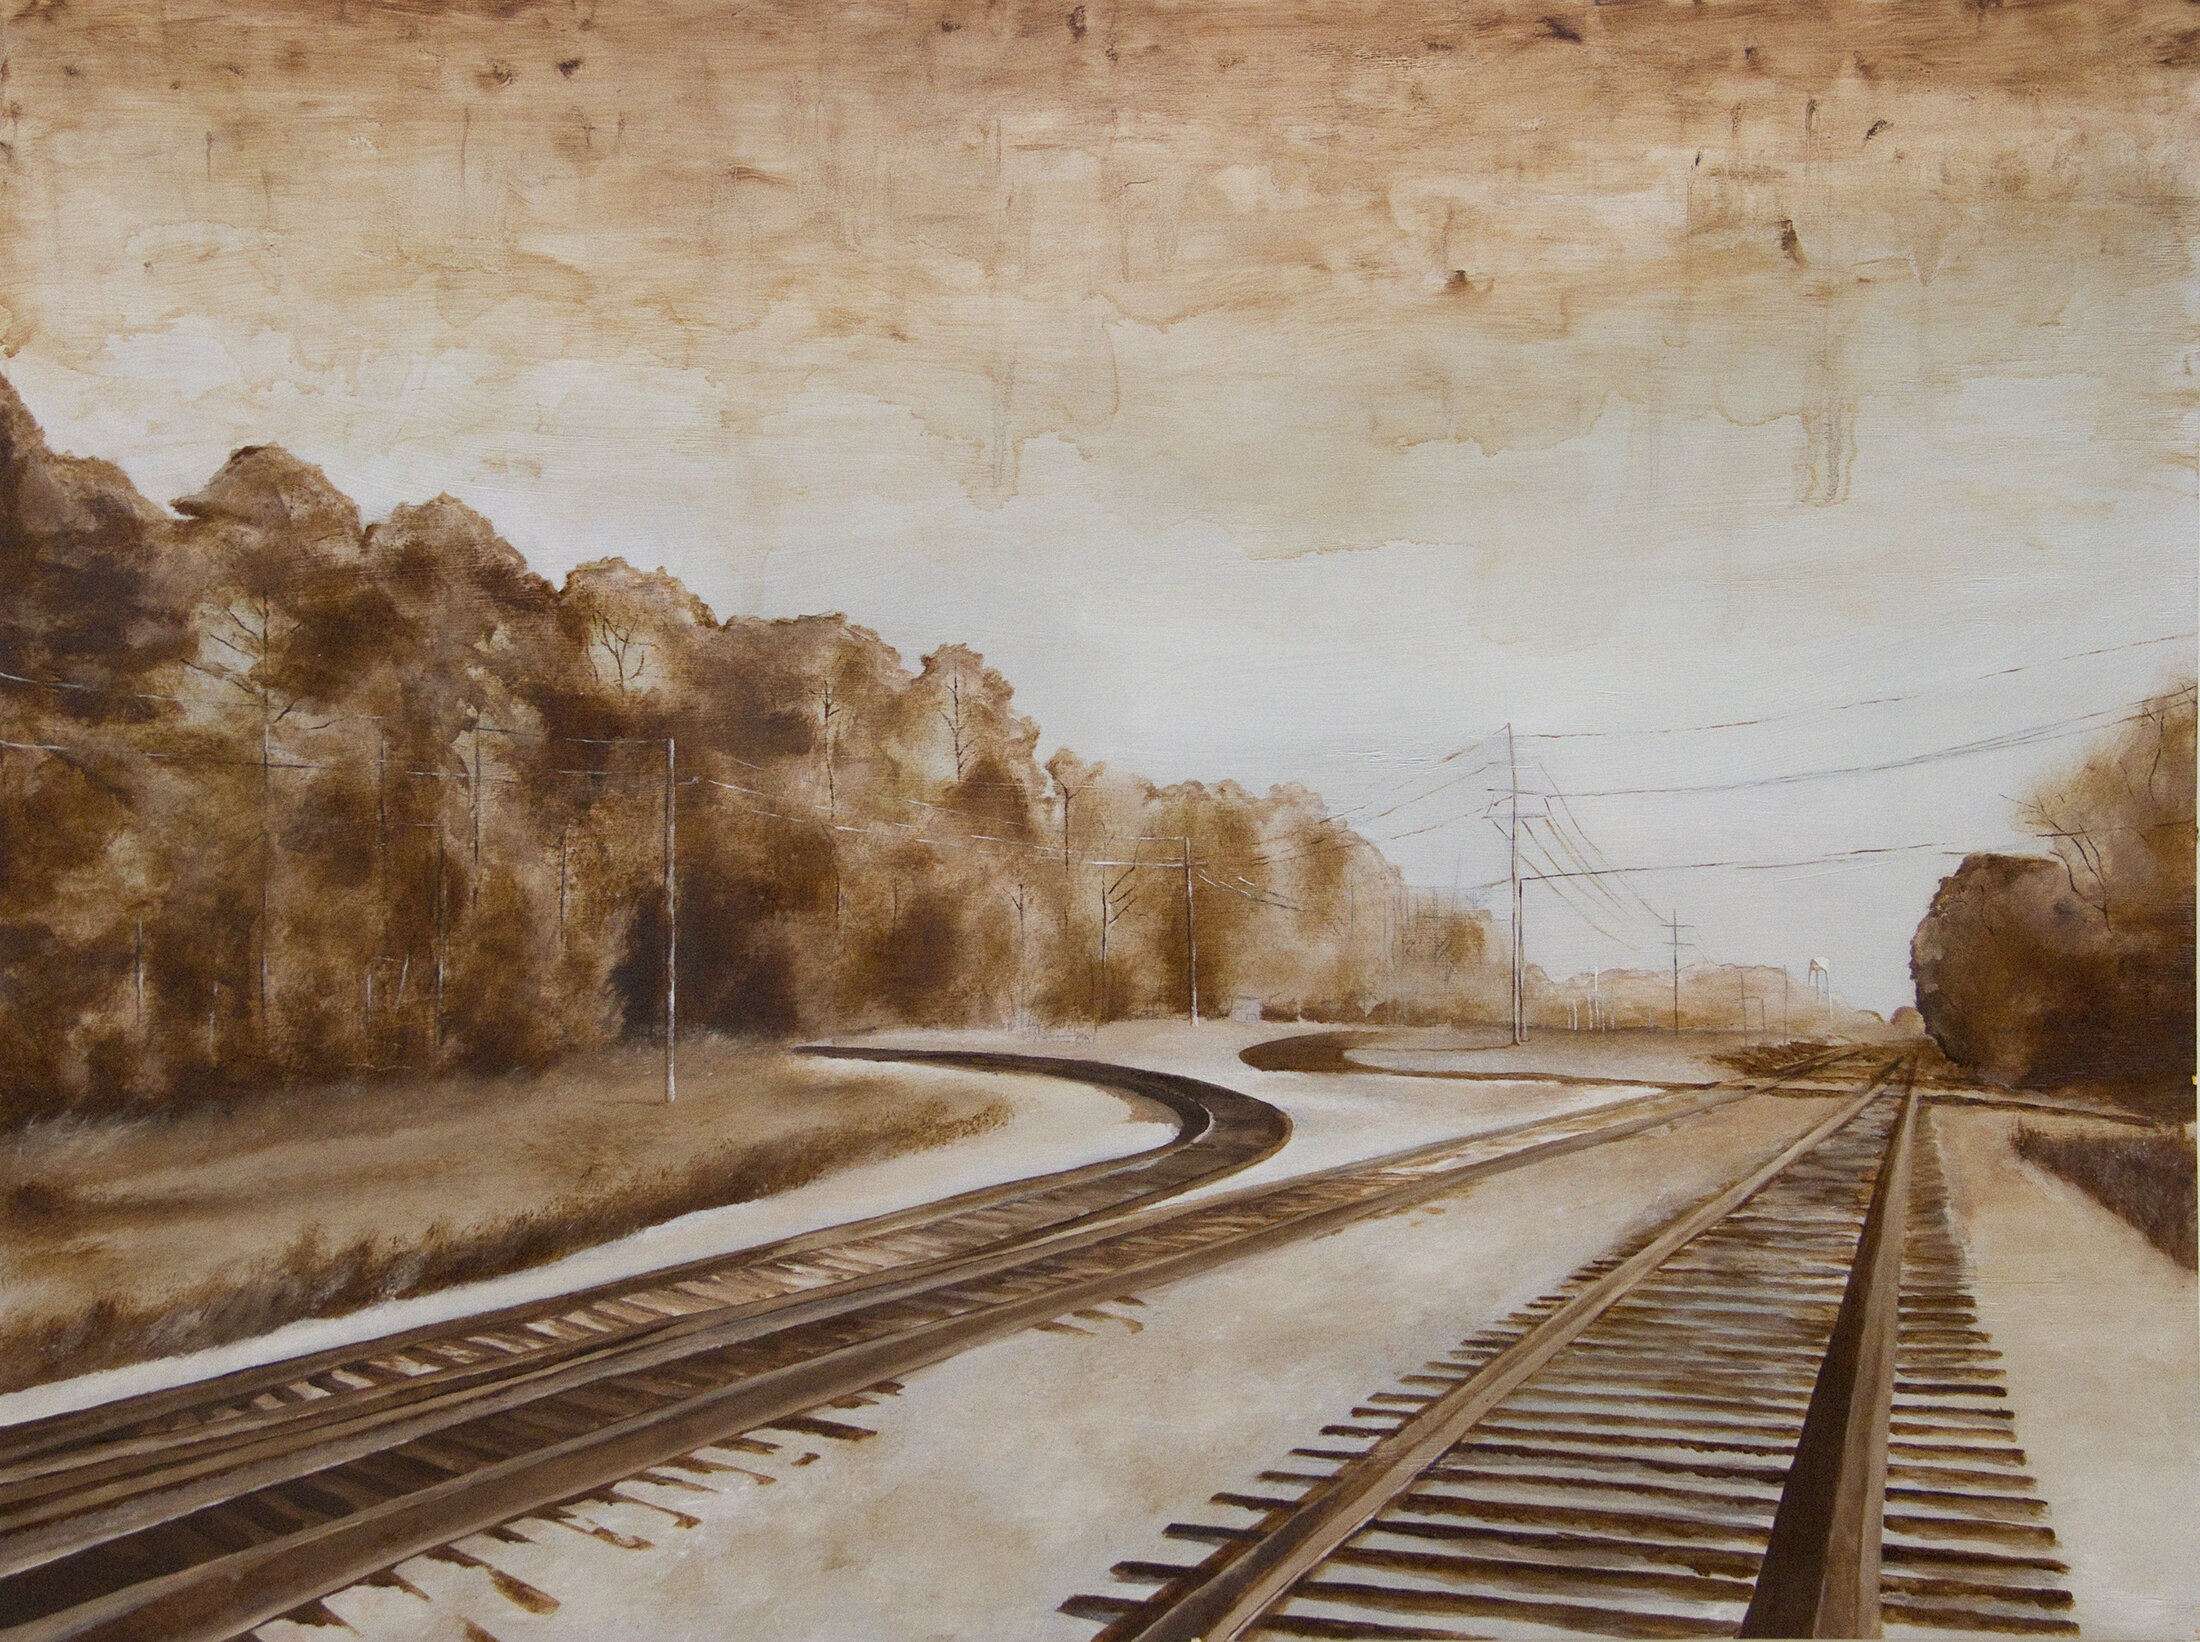   Untitled Landscape , 2013  Oil on Panel, 36 x 48” 